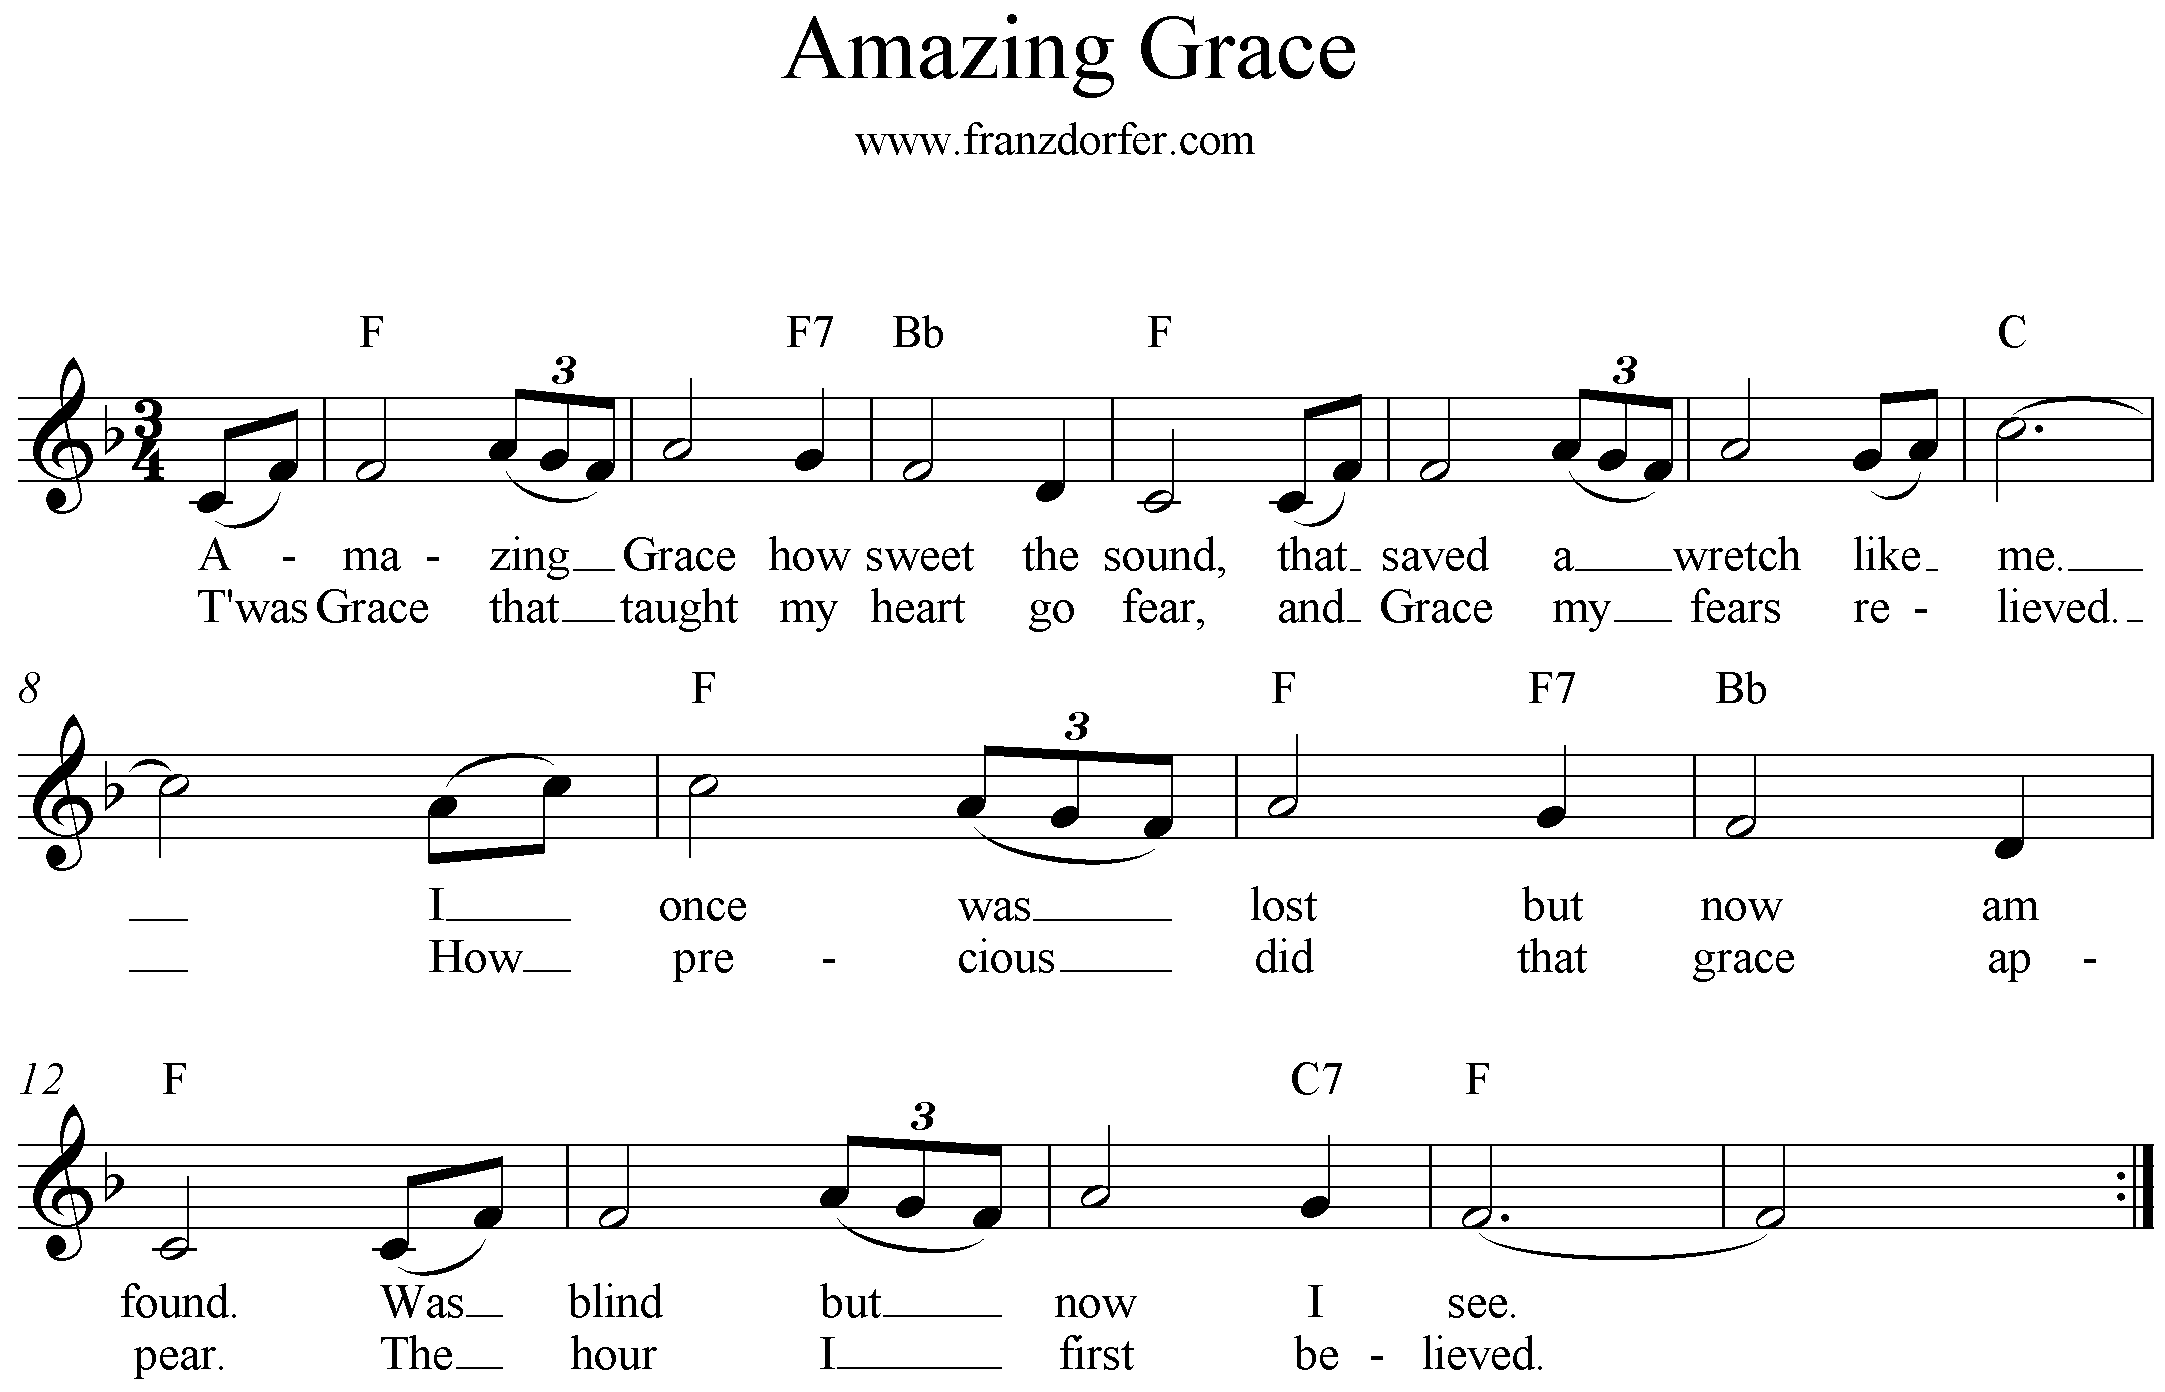 trumpet - Amazing Grace - F-Major